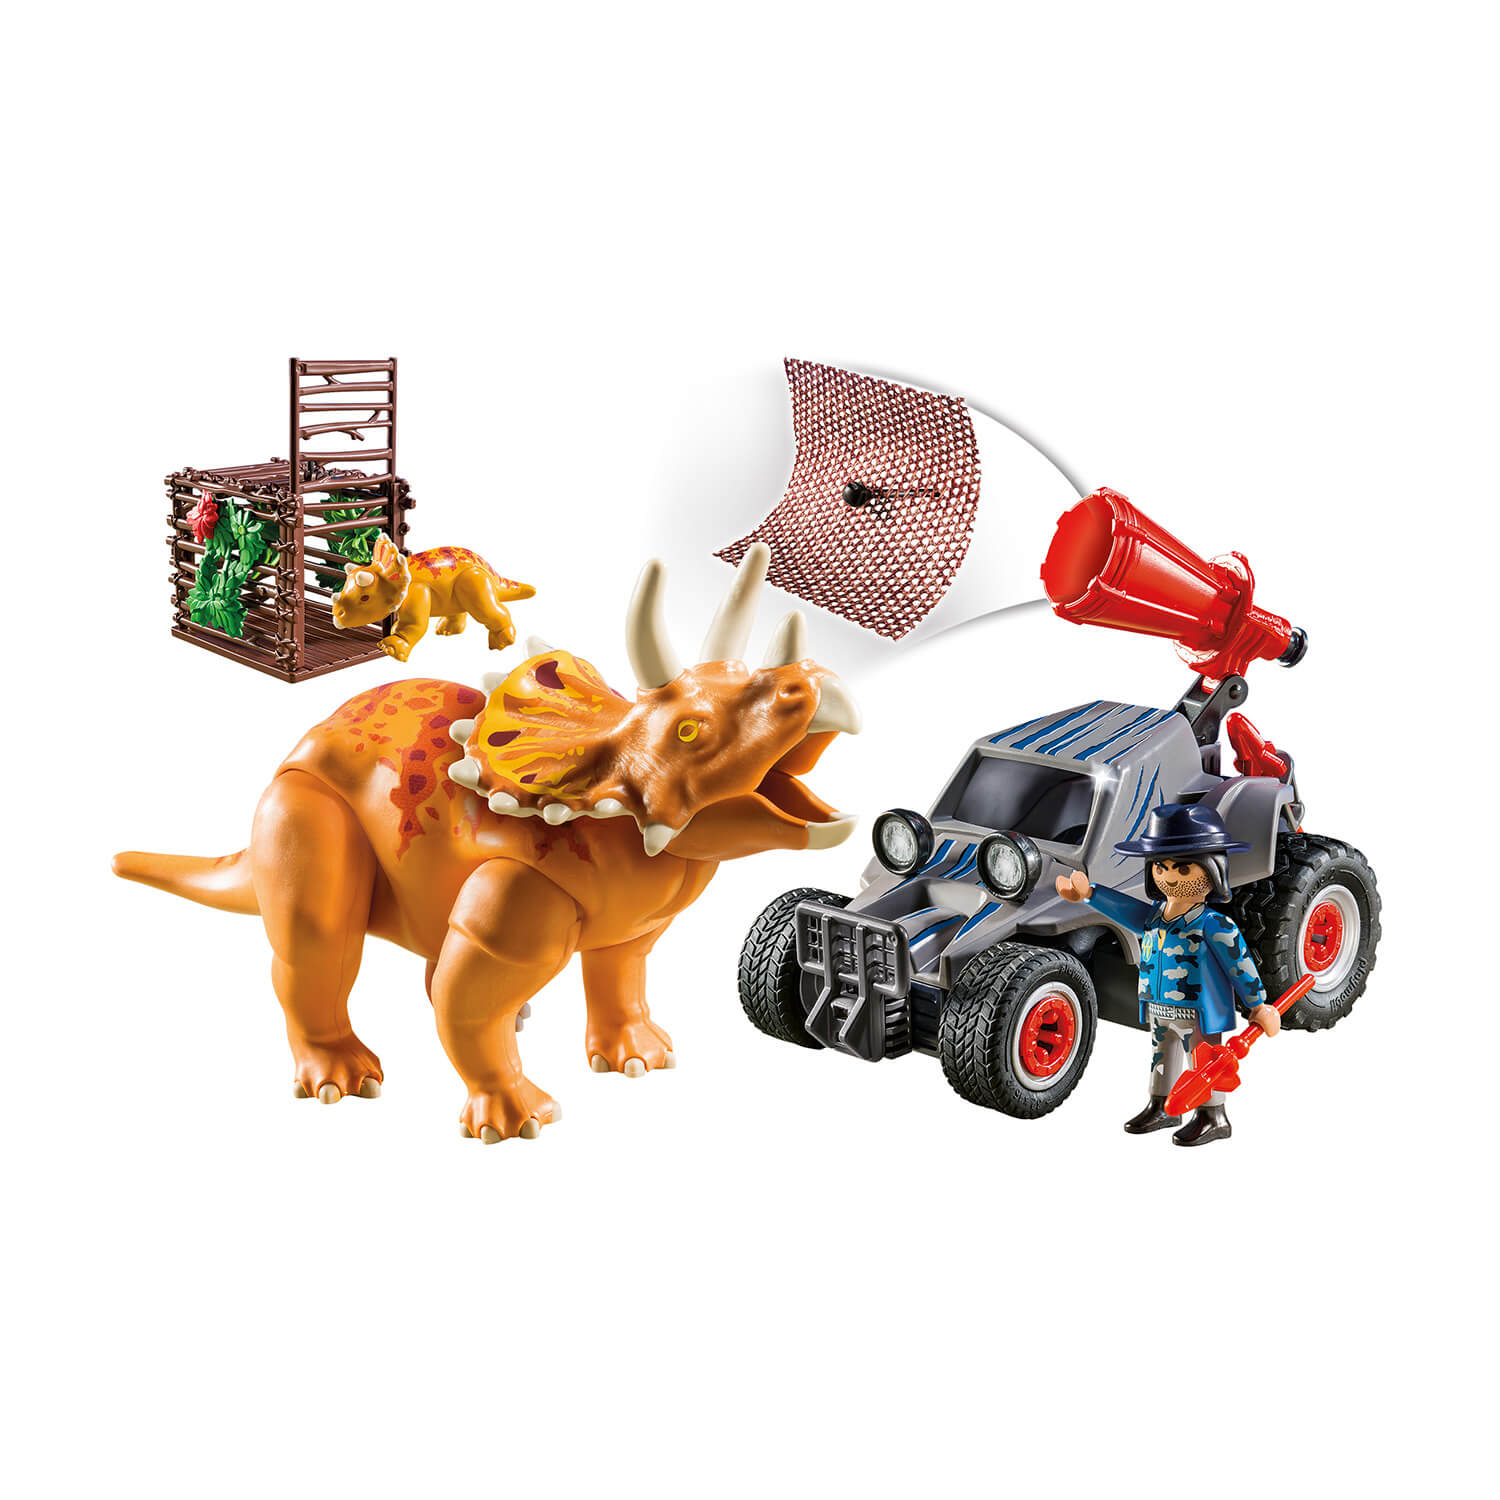 PLAYMOBIL Dinos Enemy Quad with Triceratops (9434)